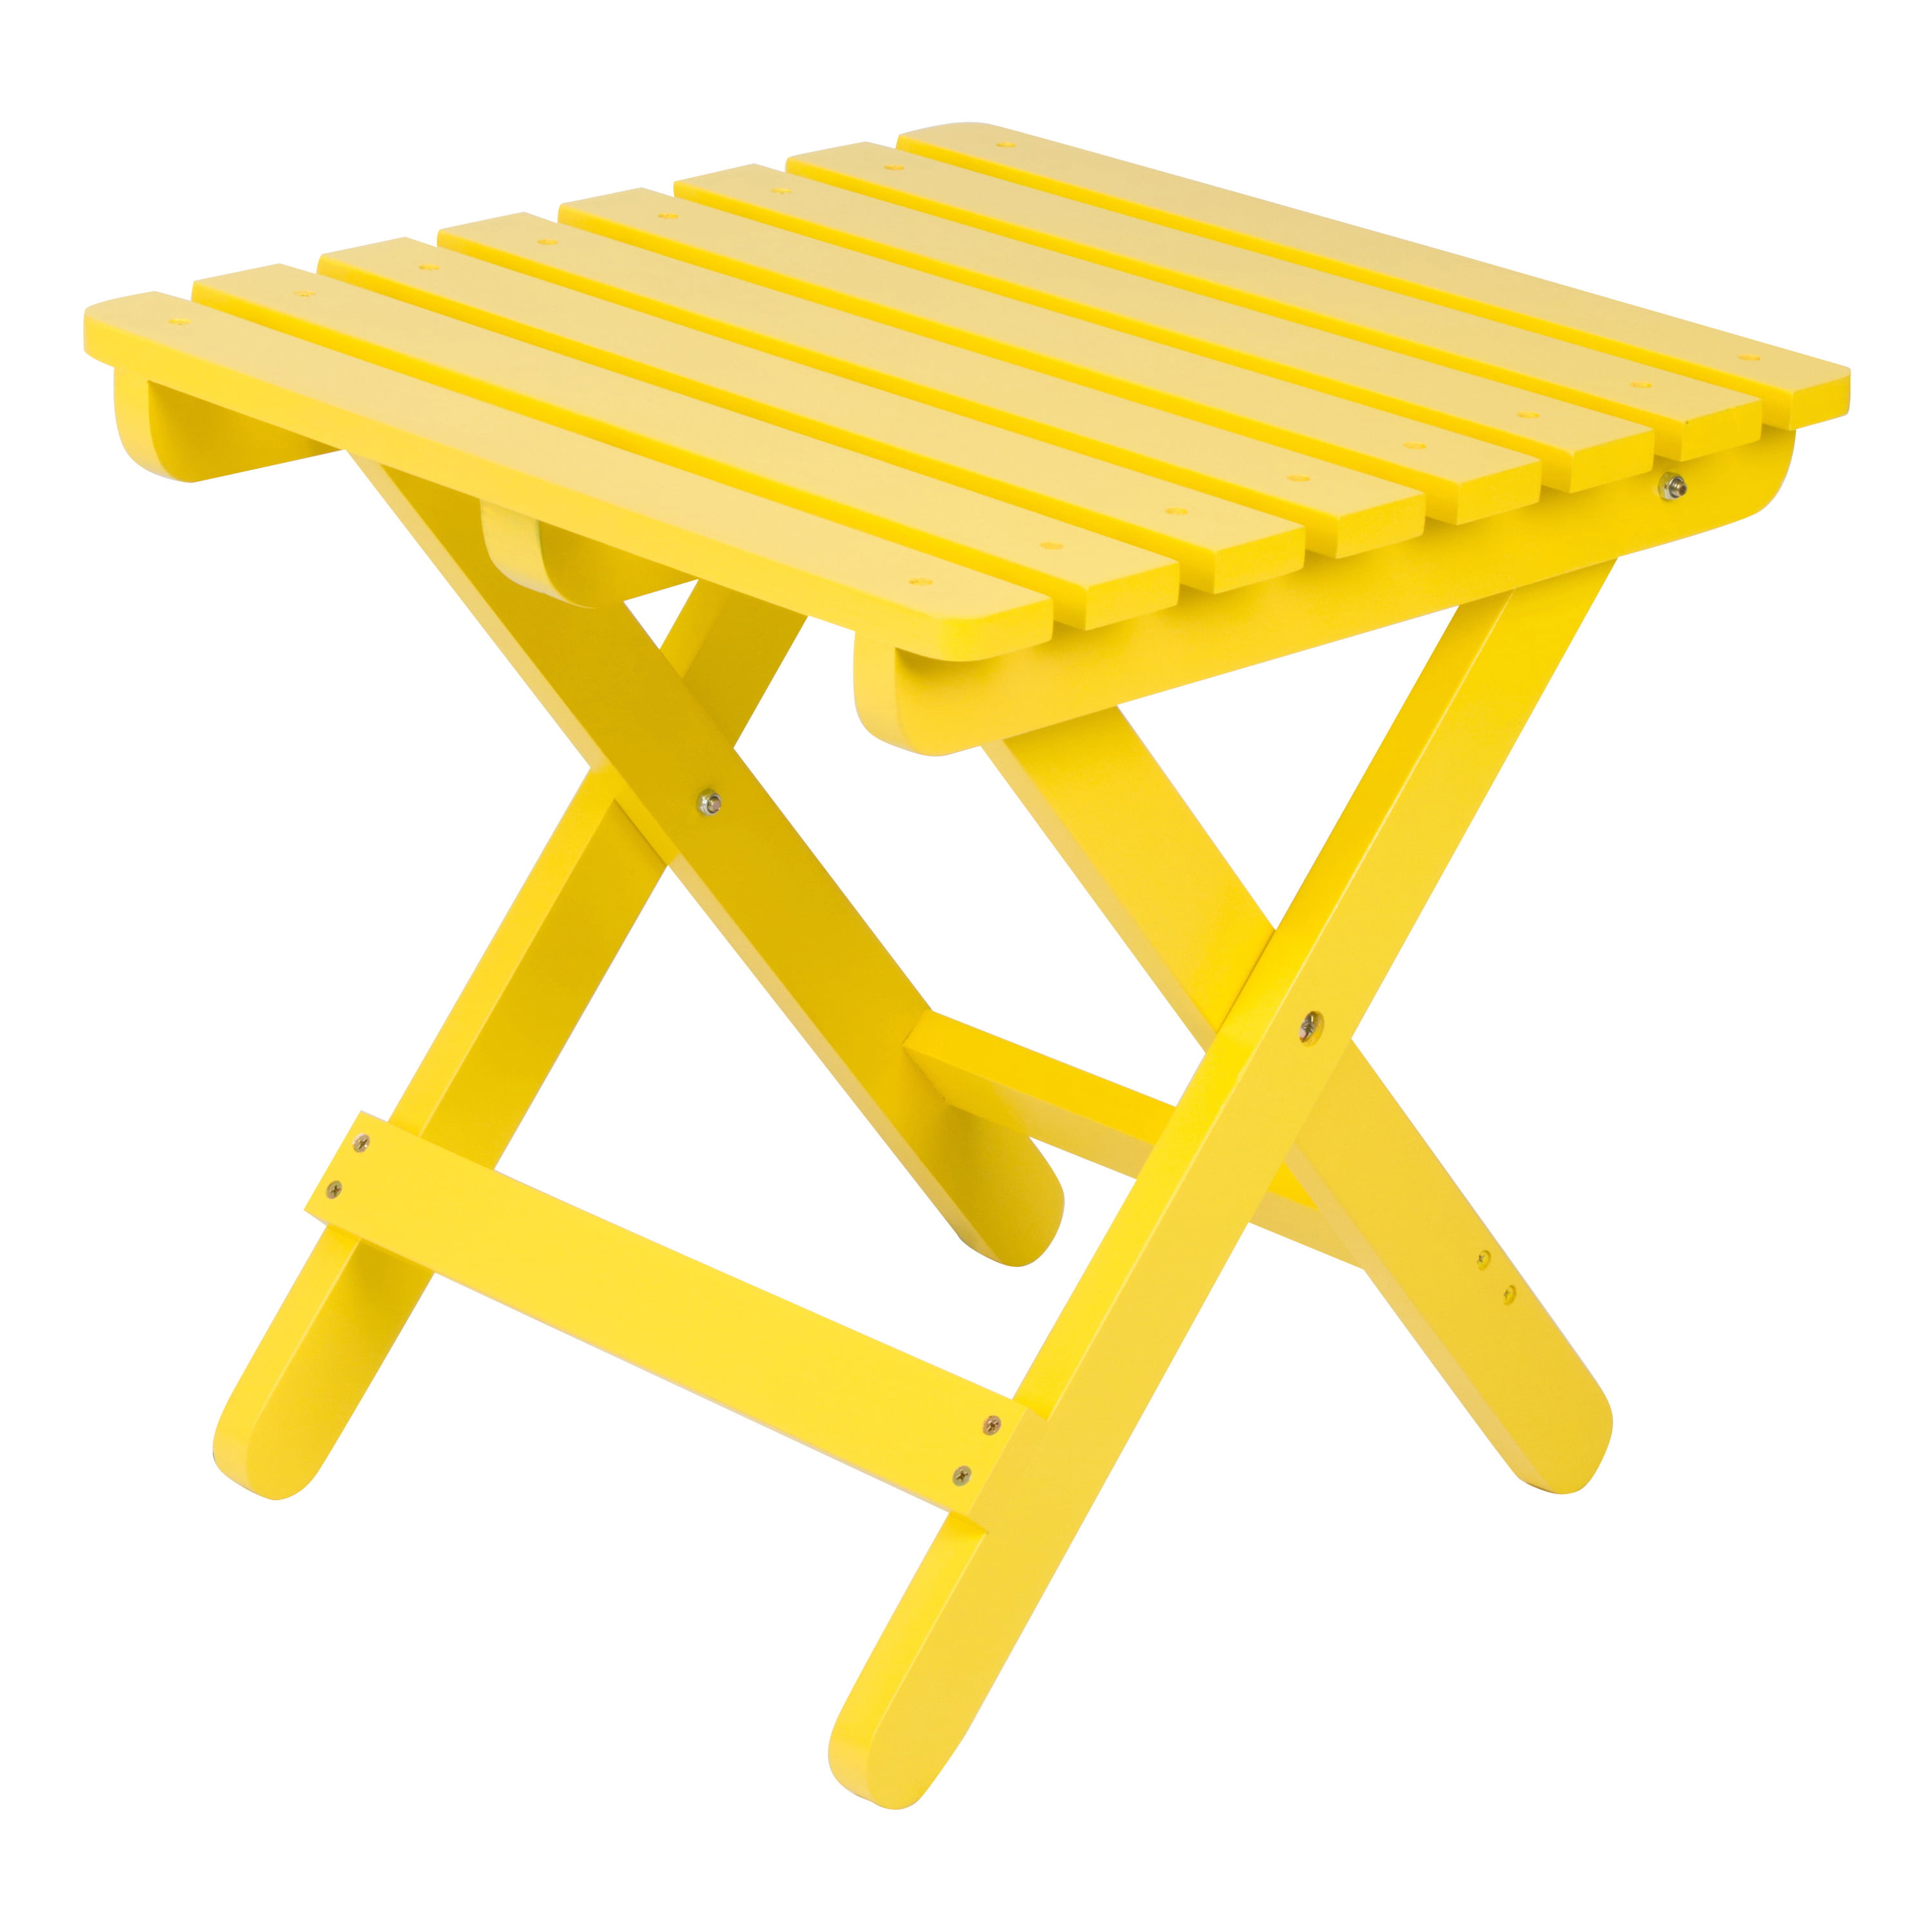 NEW Shine Company Adirondack Square Folding Table Lemon Yellow FREE2DAYSHIP 